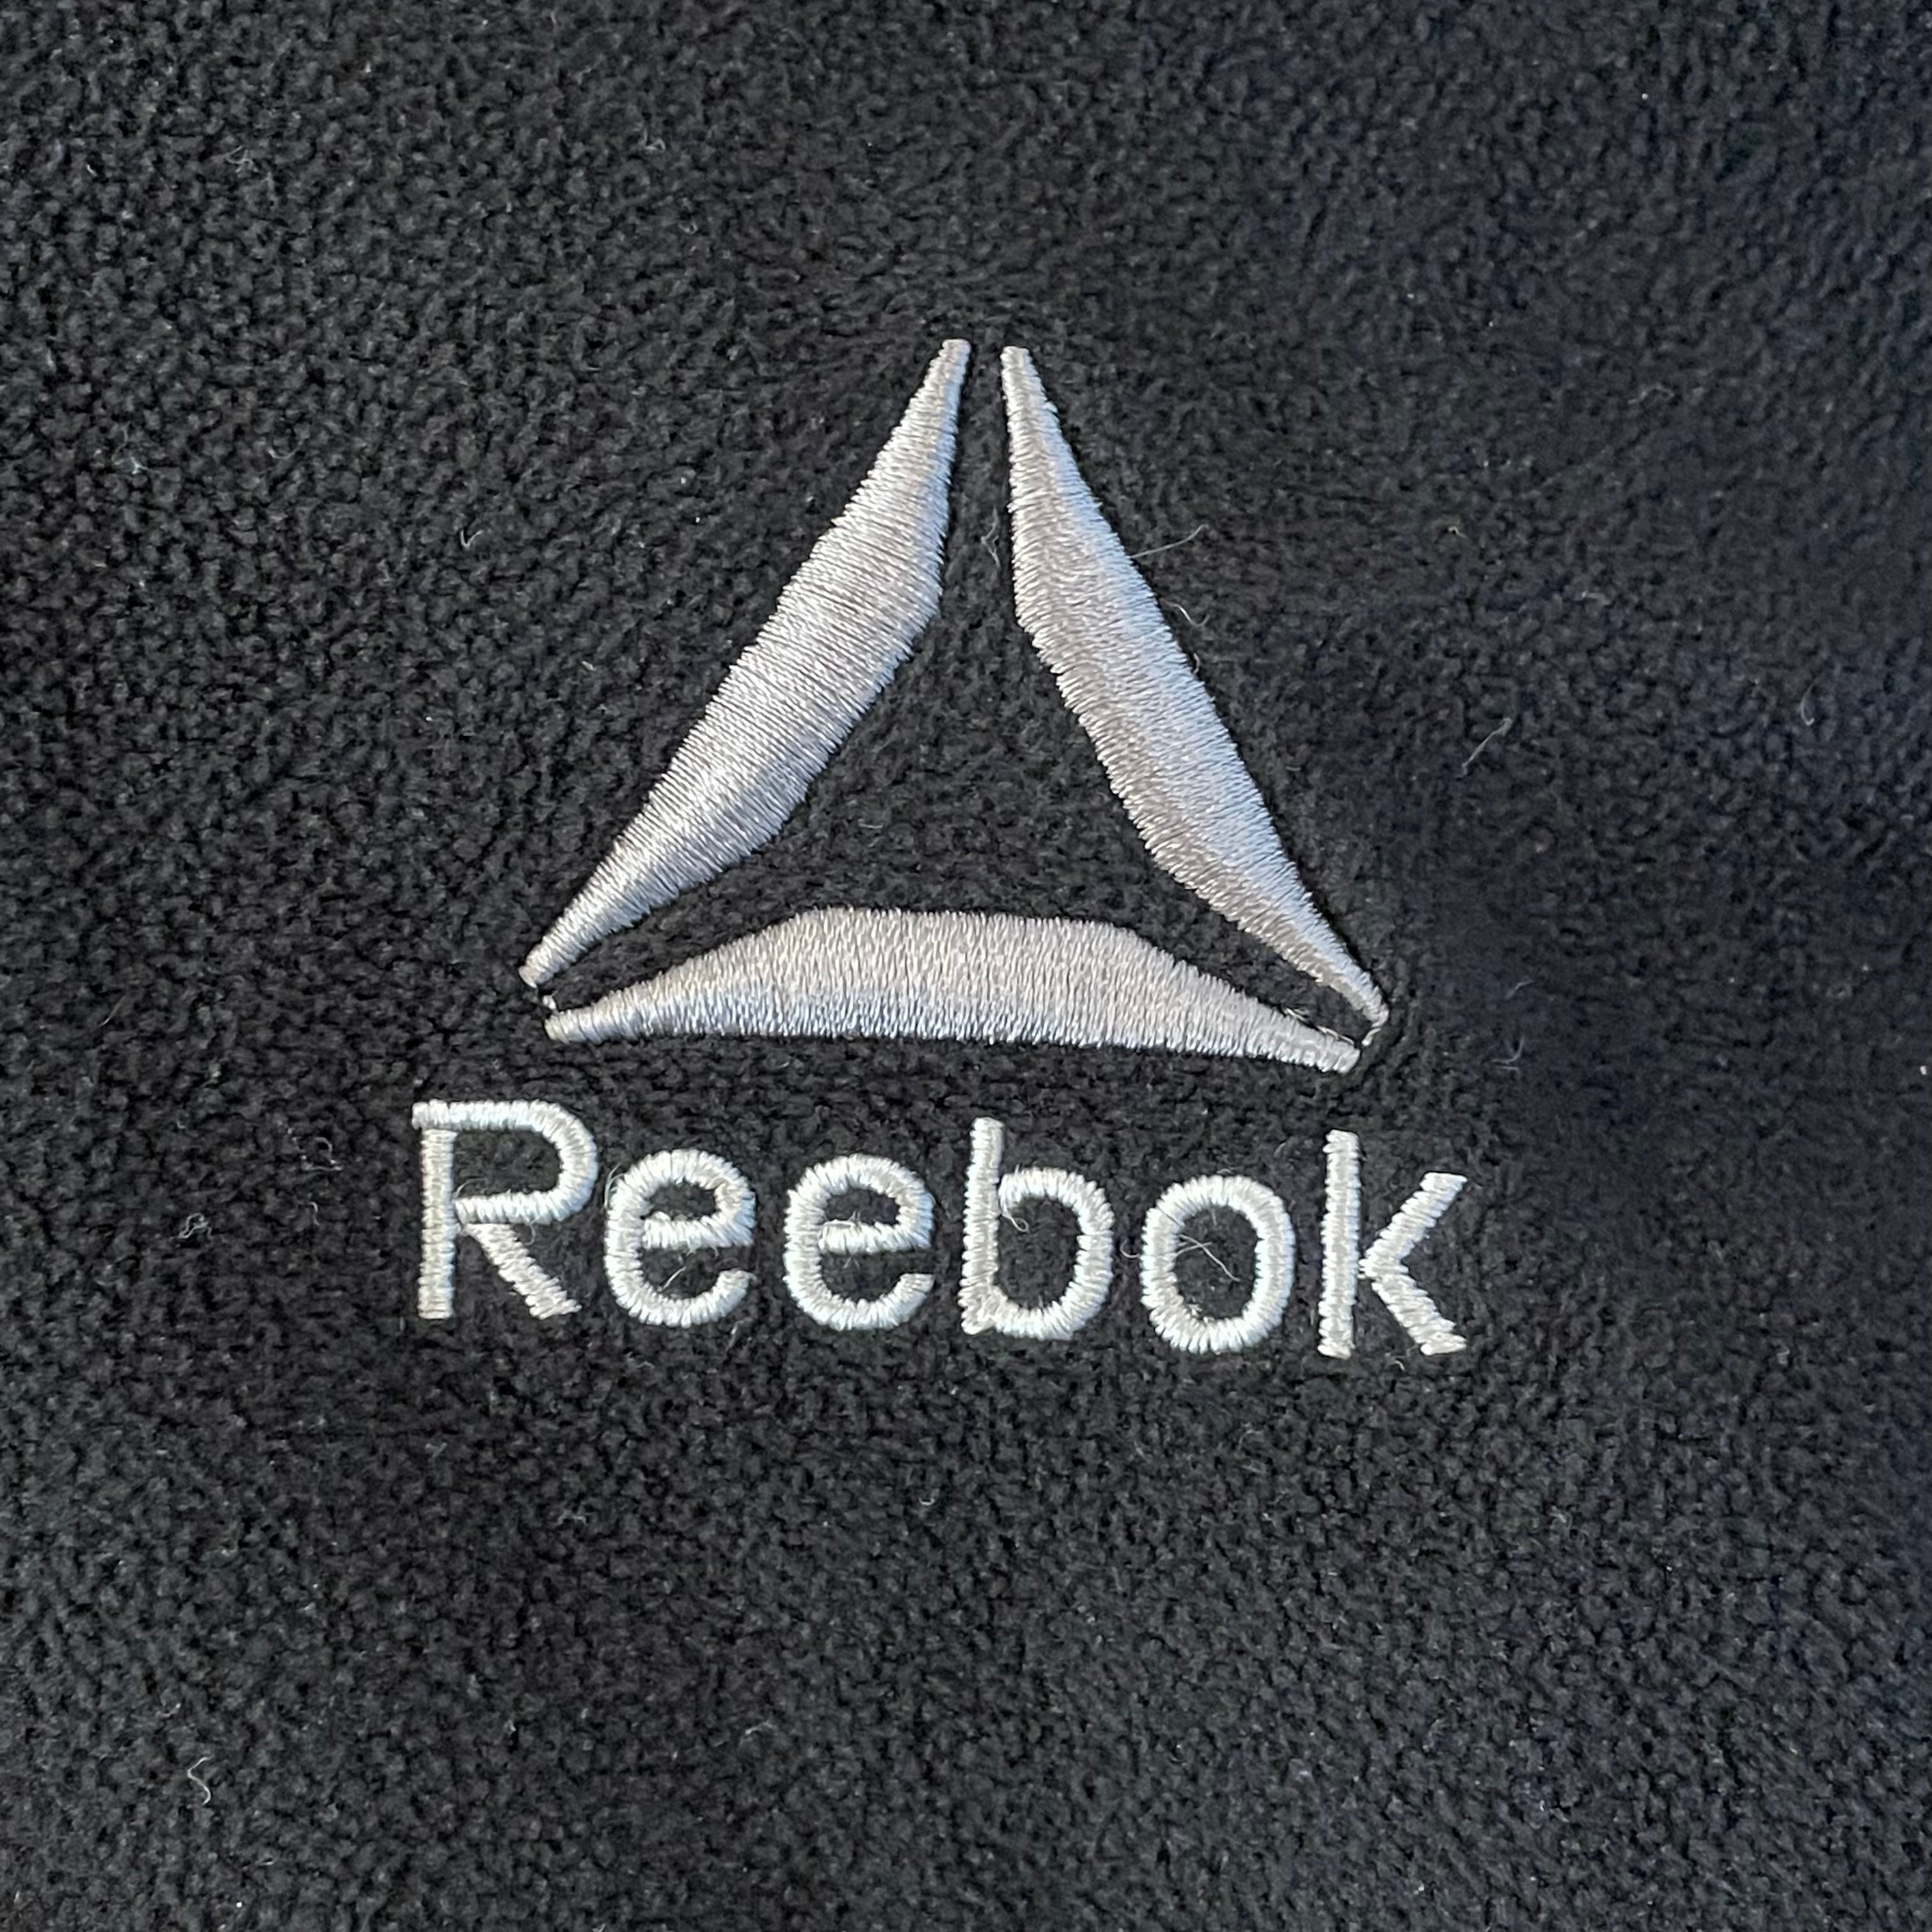 Reebok リーボック フリース XL ハーフジップ 刺繍ロゴ カレッジロゴ